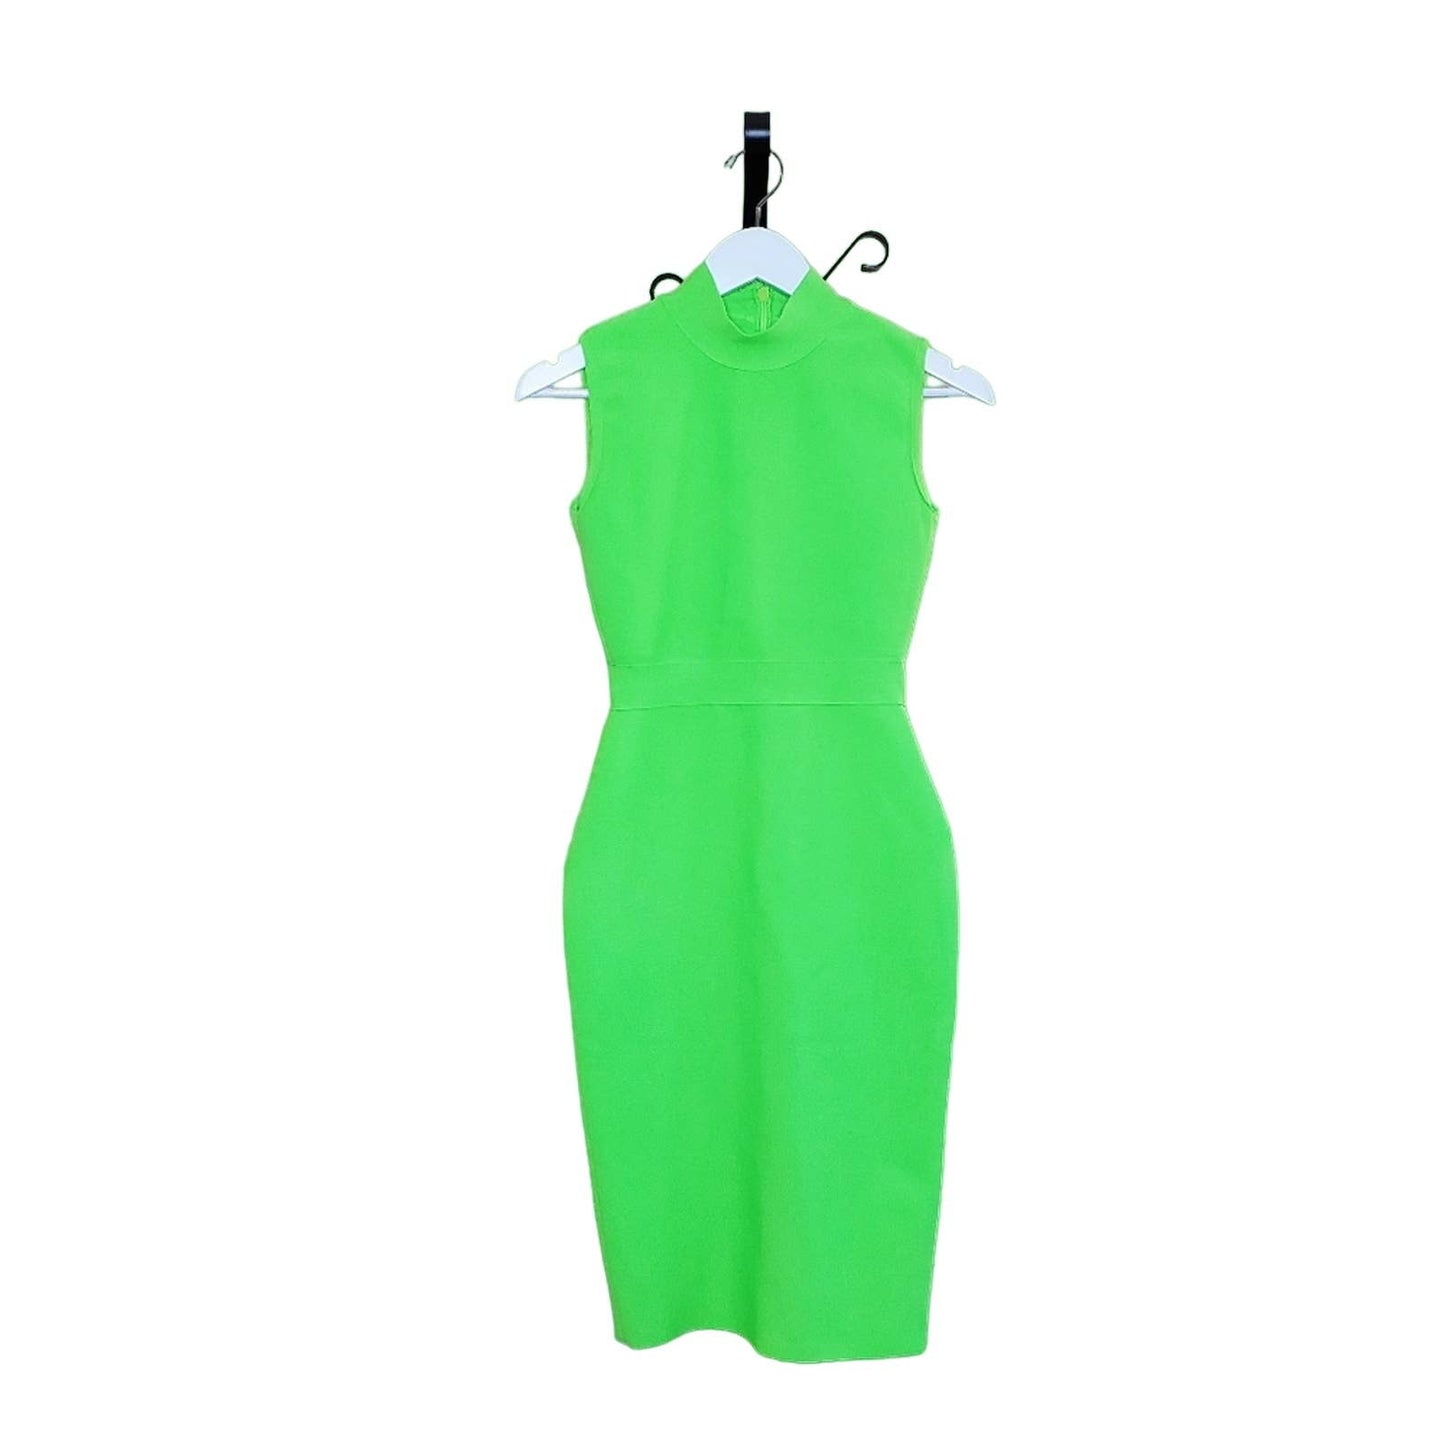 NWOT Bodycon Neon Green Dress, Small